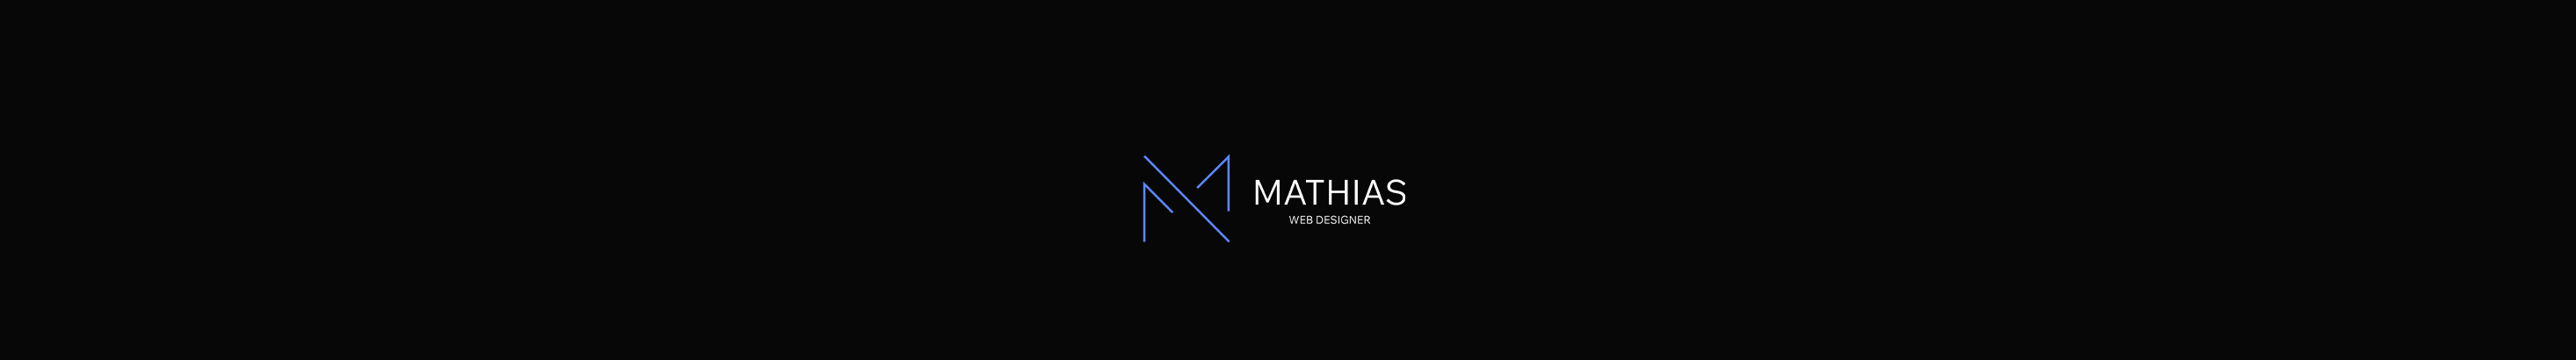 João Mathias's profile banner